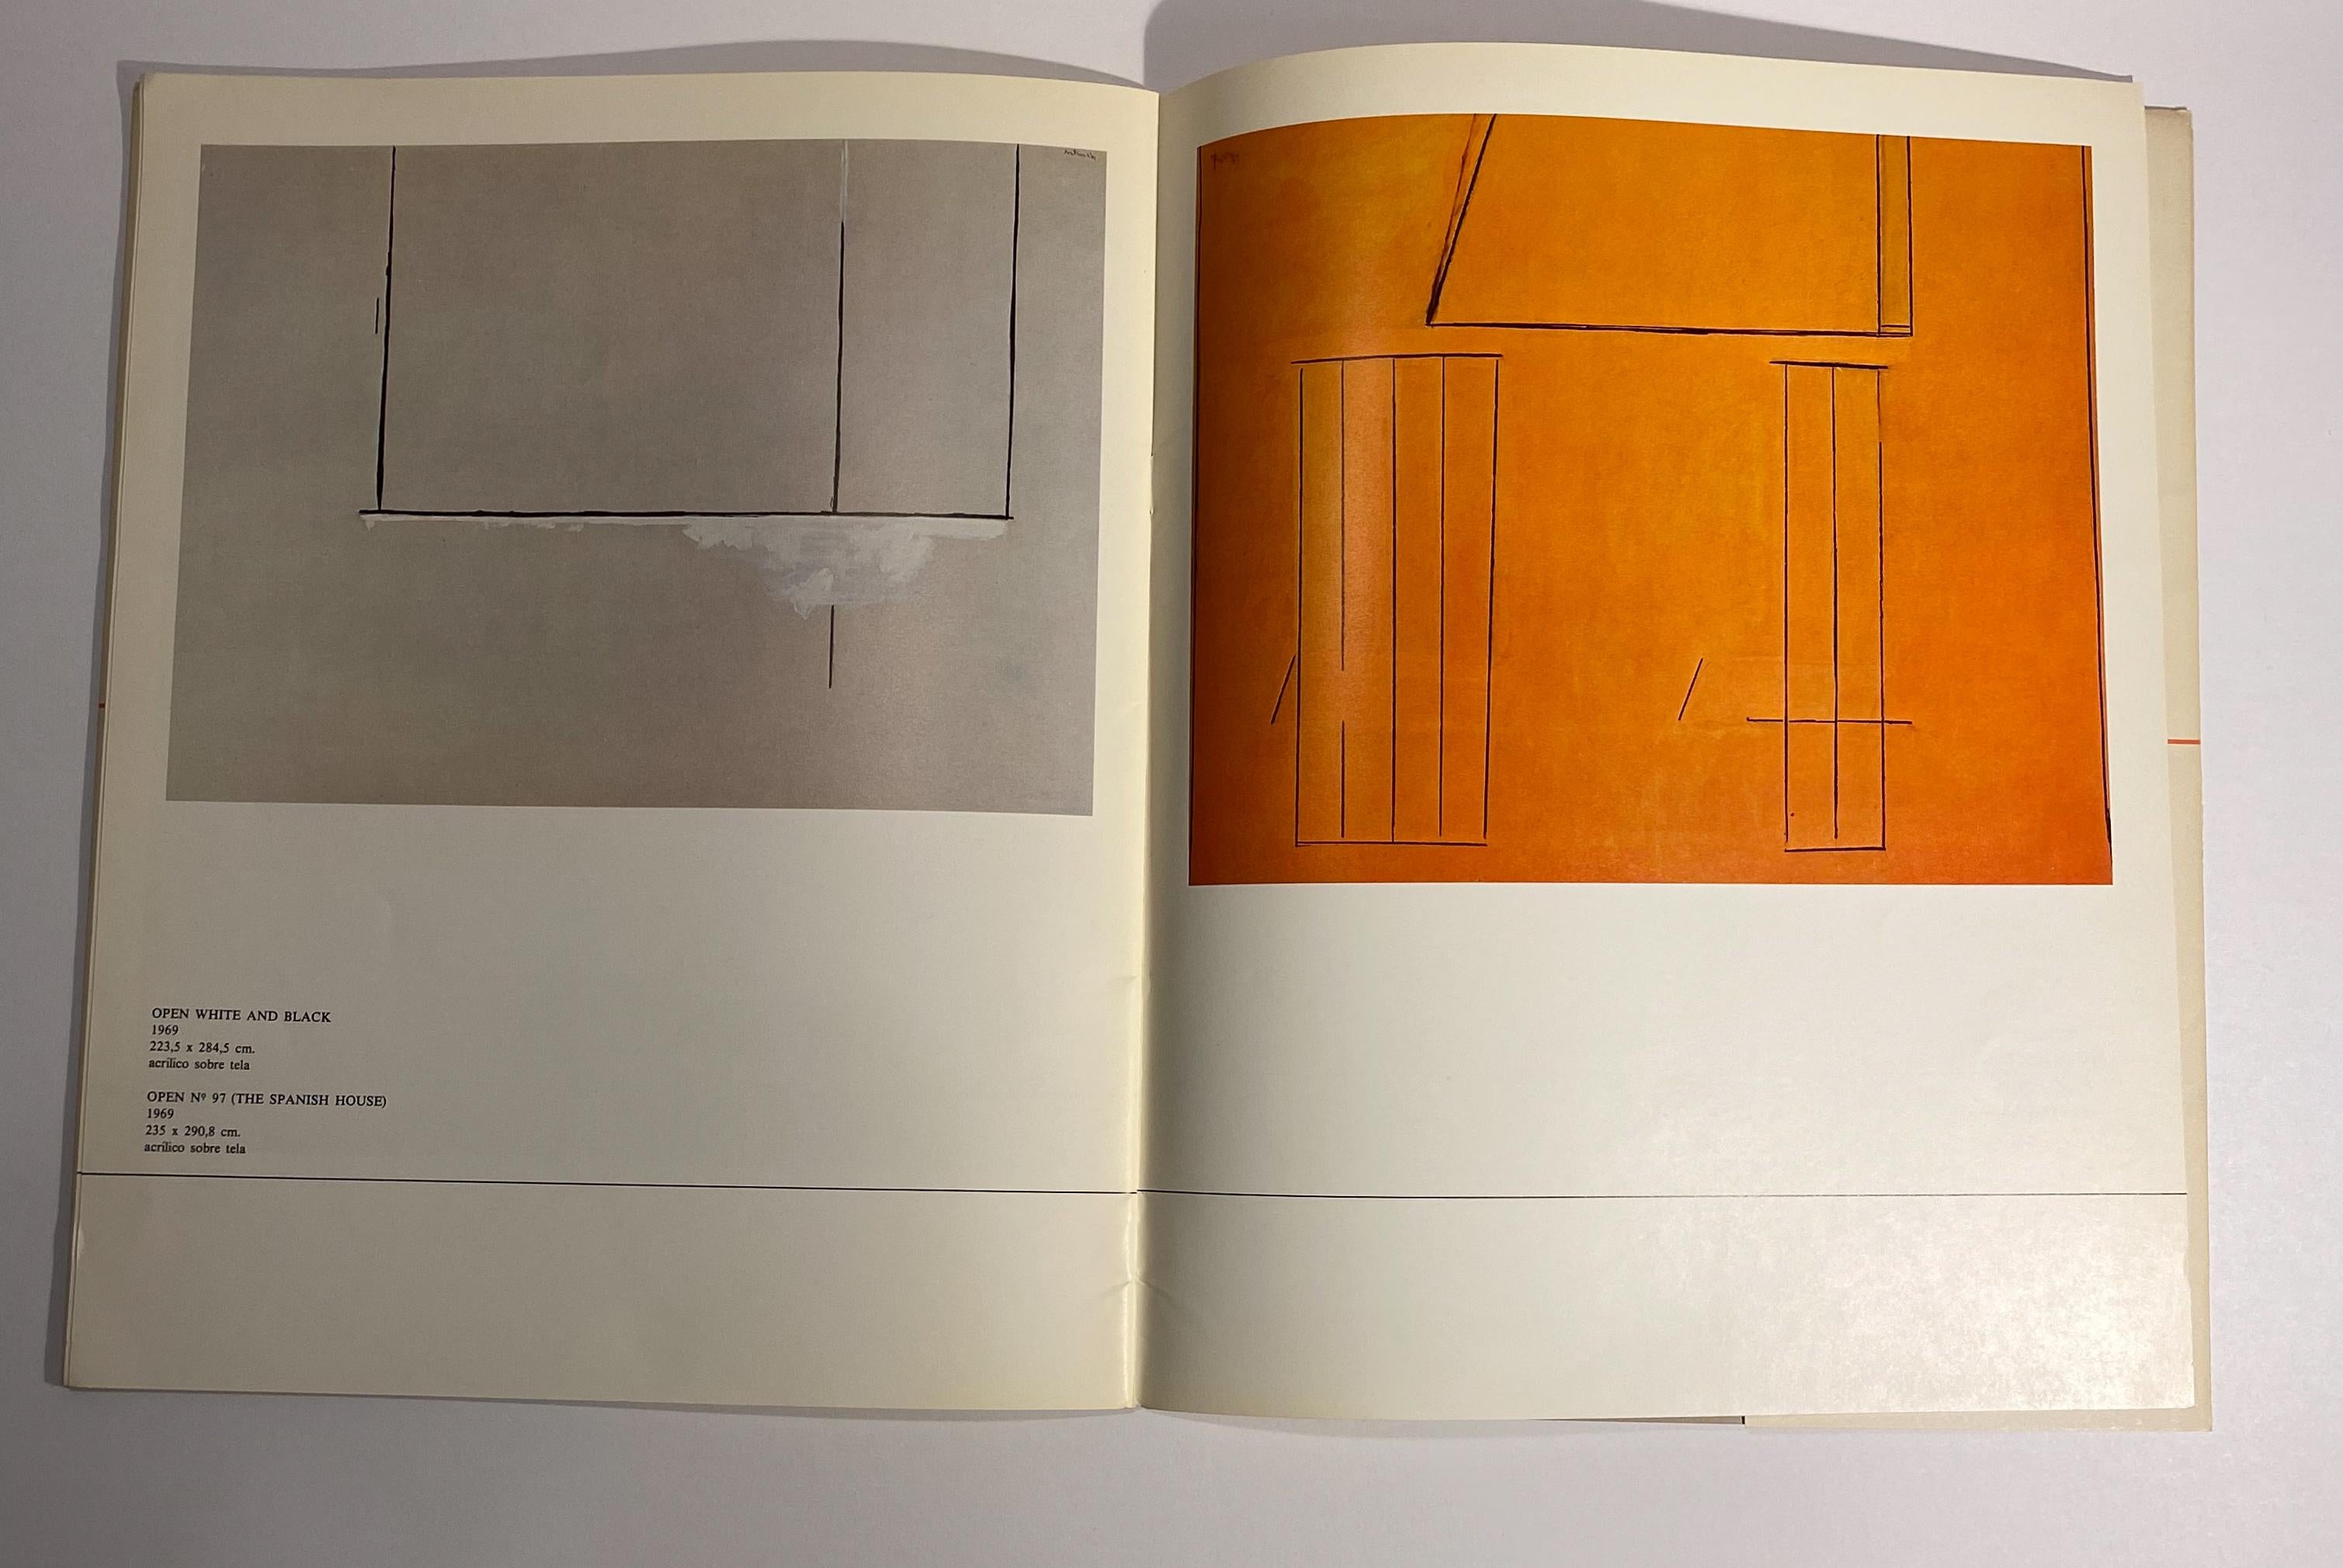 David Smith, Robert Motherwell Catalog with Installation Photographs 1